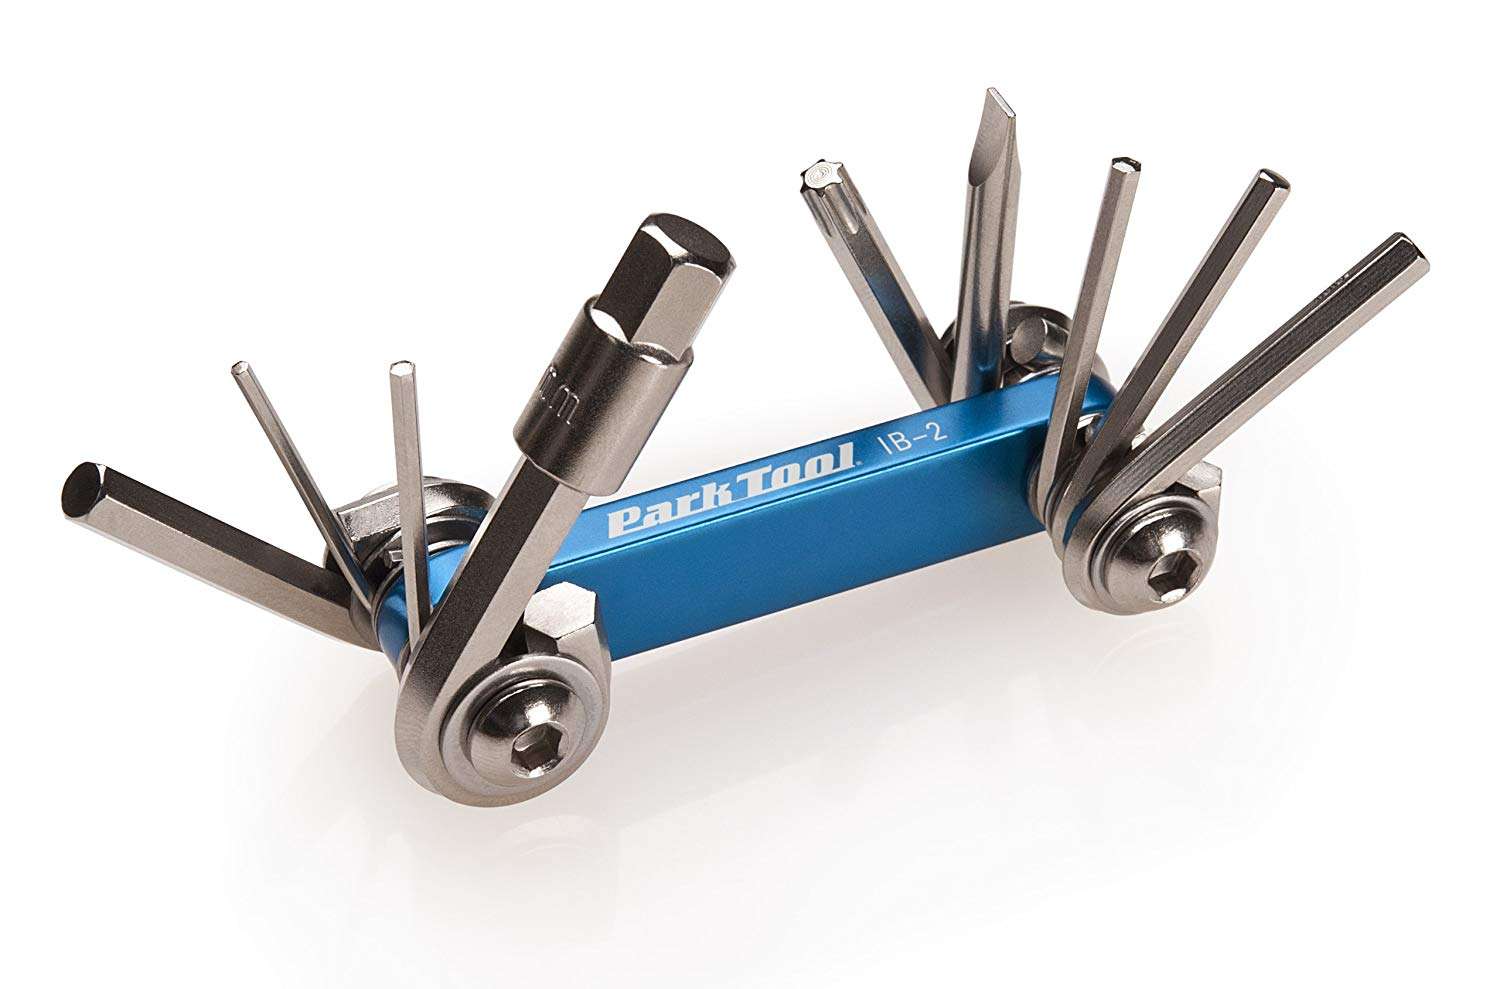 Image of a Park Tool Multi Tool used for bike tool kits